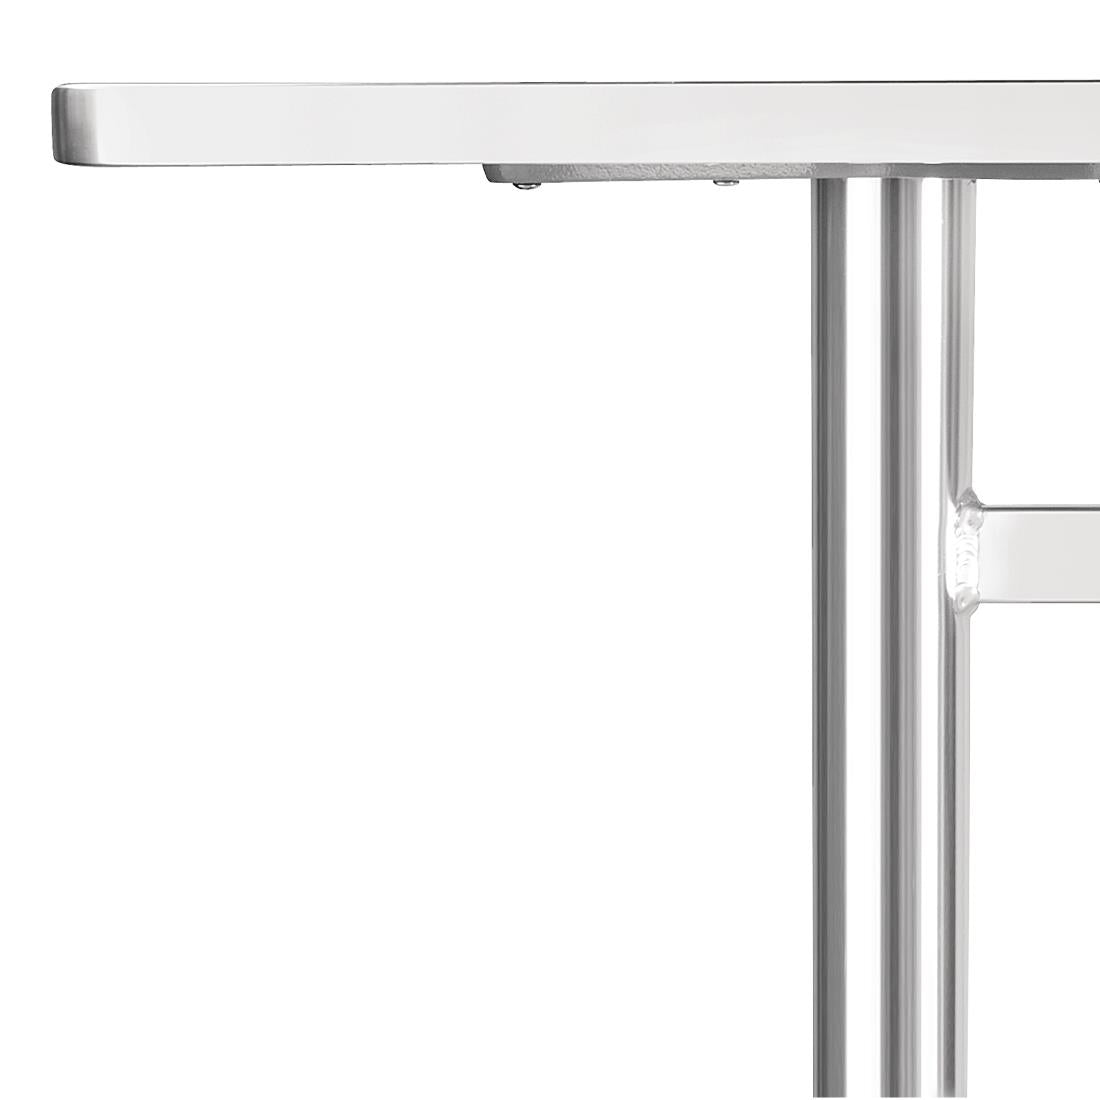 Bolero Double Pedestal Table Rectangular 1200mm JD Catering Equipment Solutions Ltd